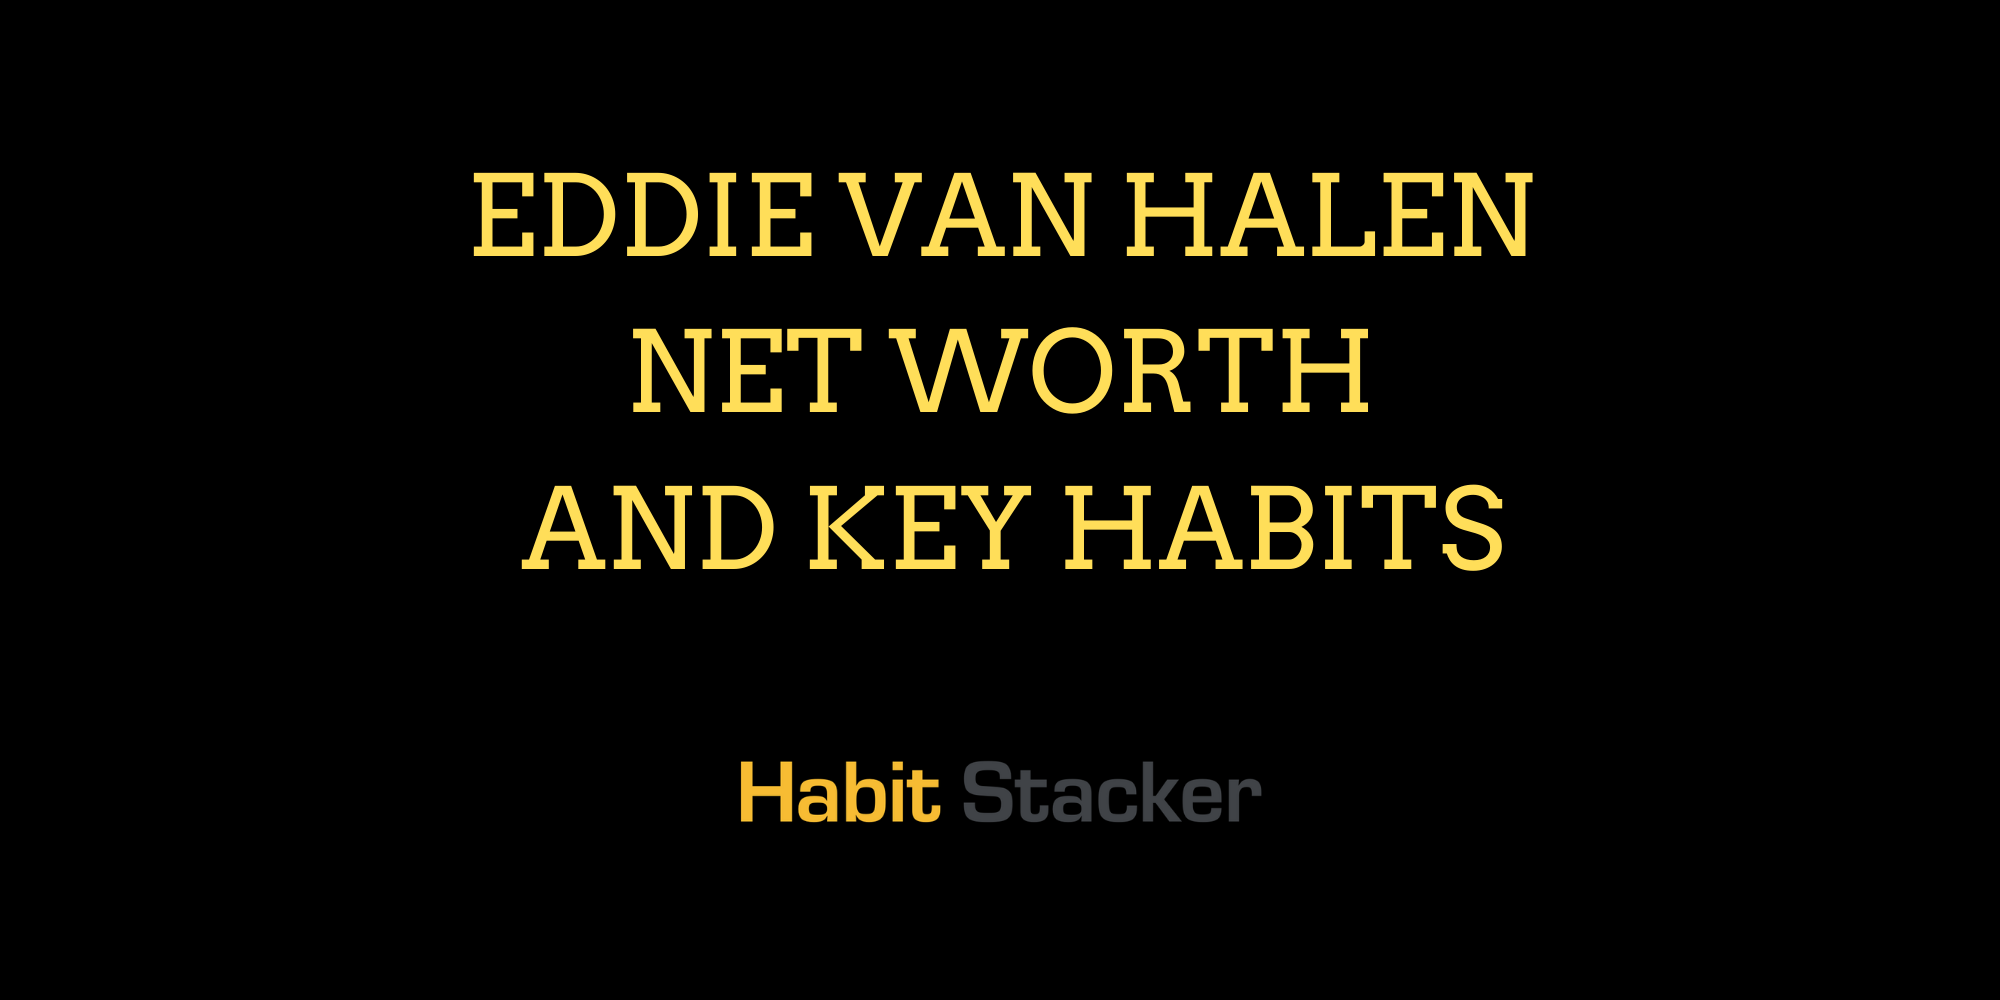 Eddie Van Halen Net Worth and Key Habits